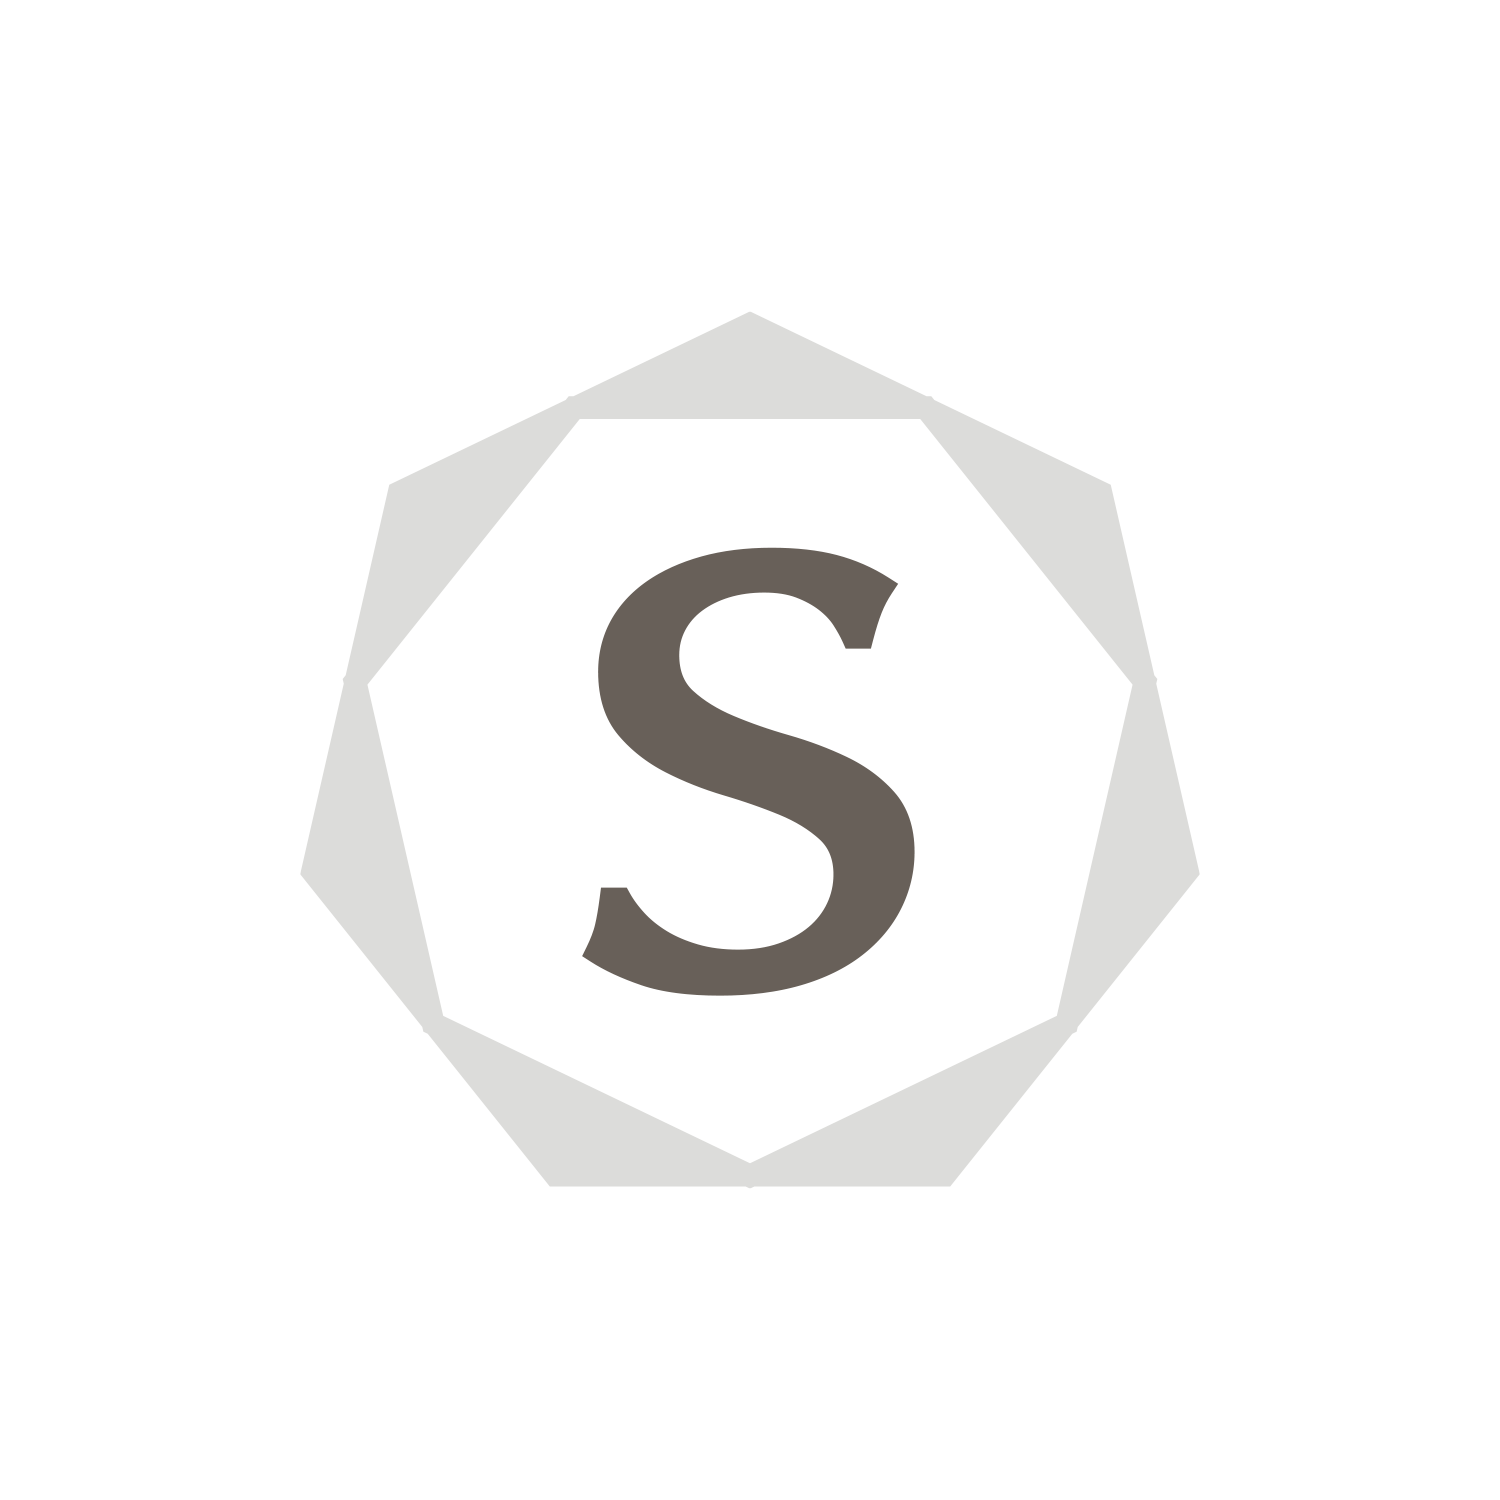 Sunfield Logo Design - Milliken, CO Real Estate Development